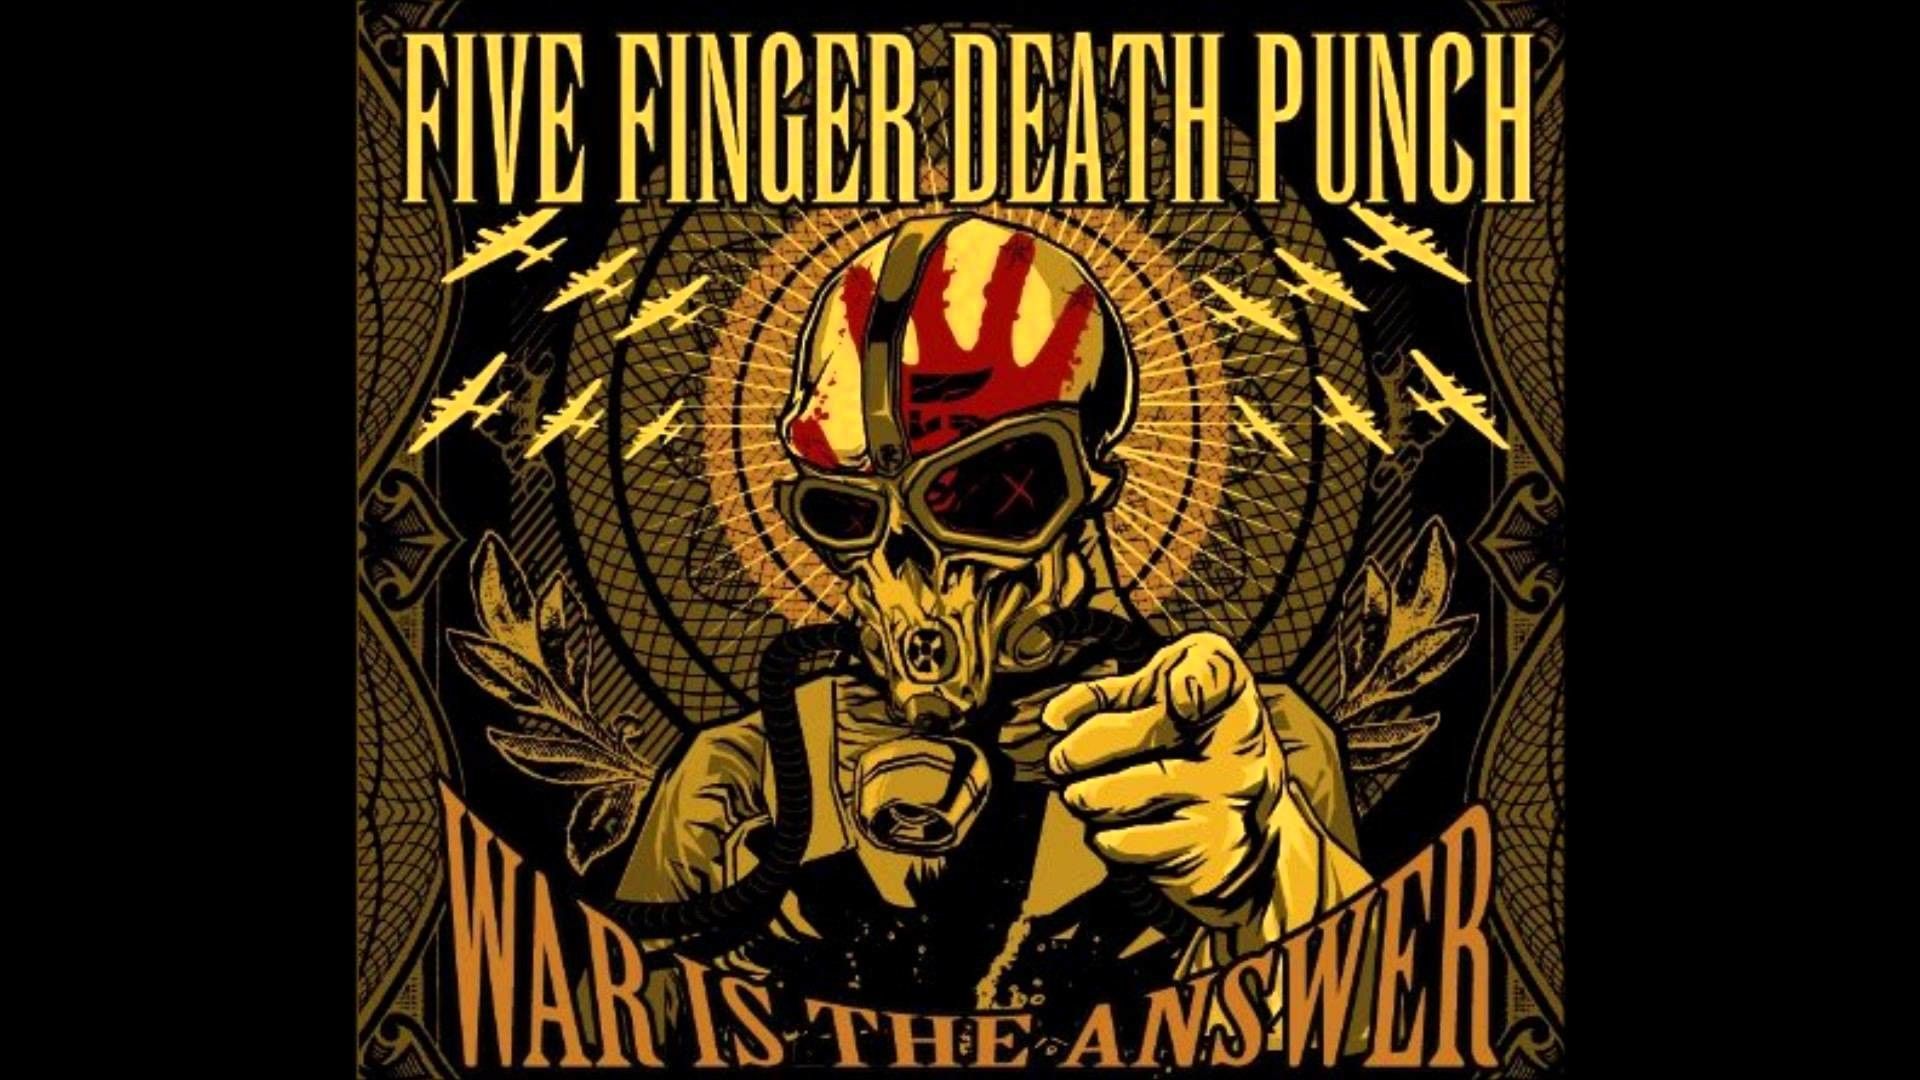 Wallpaper Five Finger Death Punch